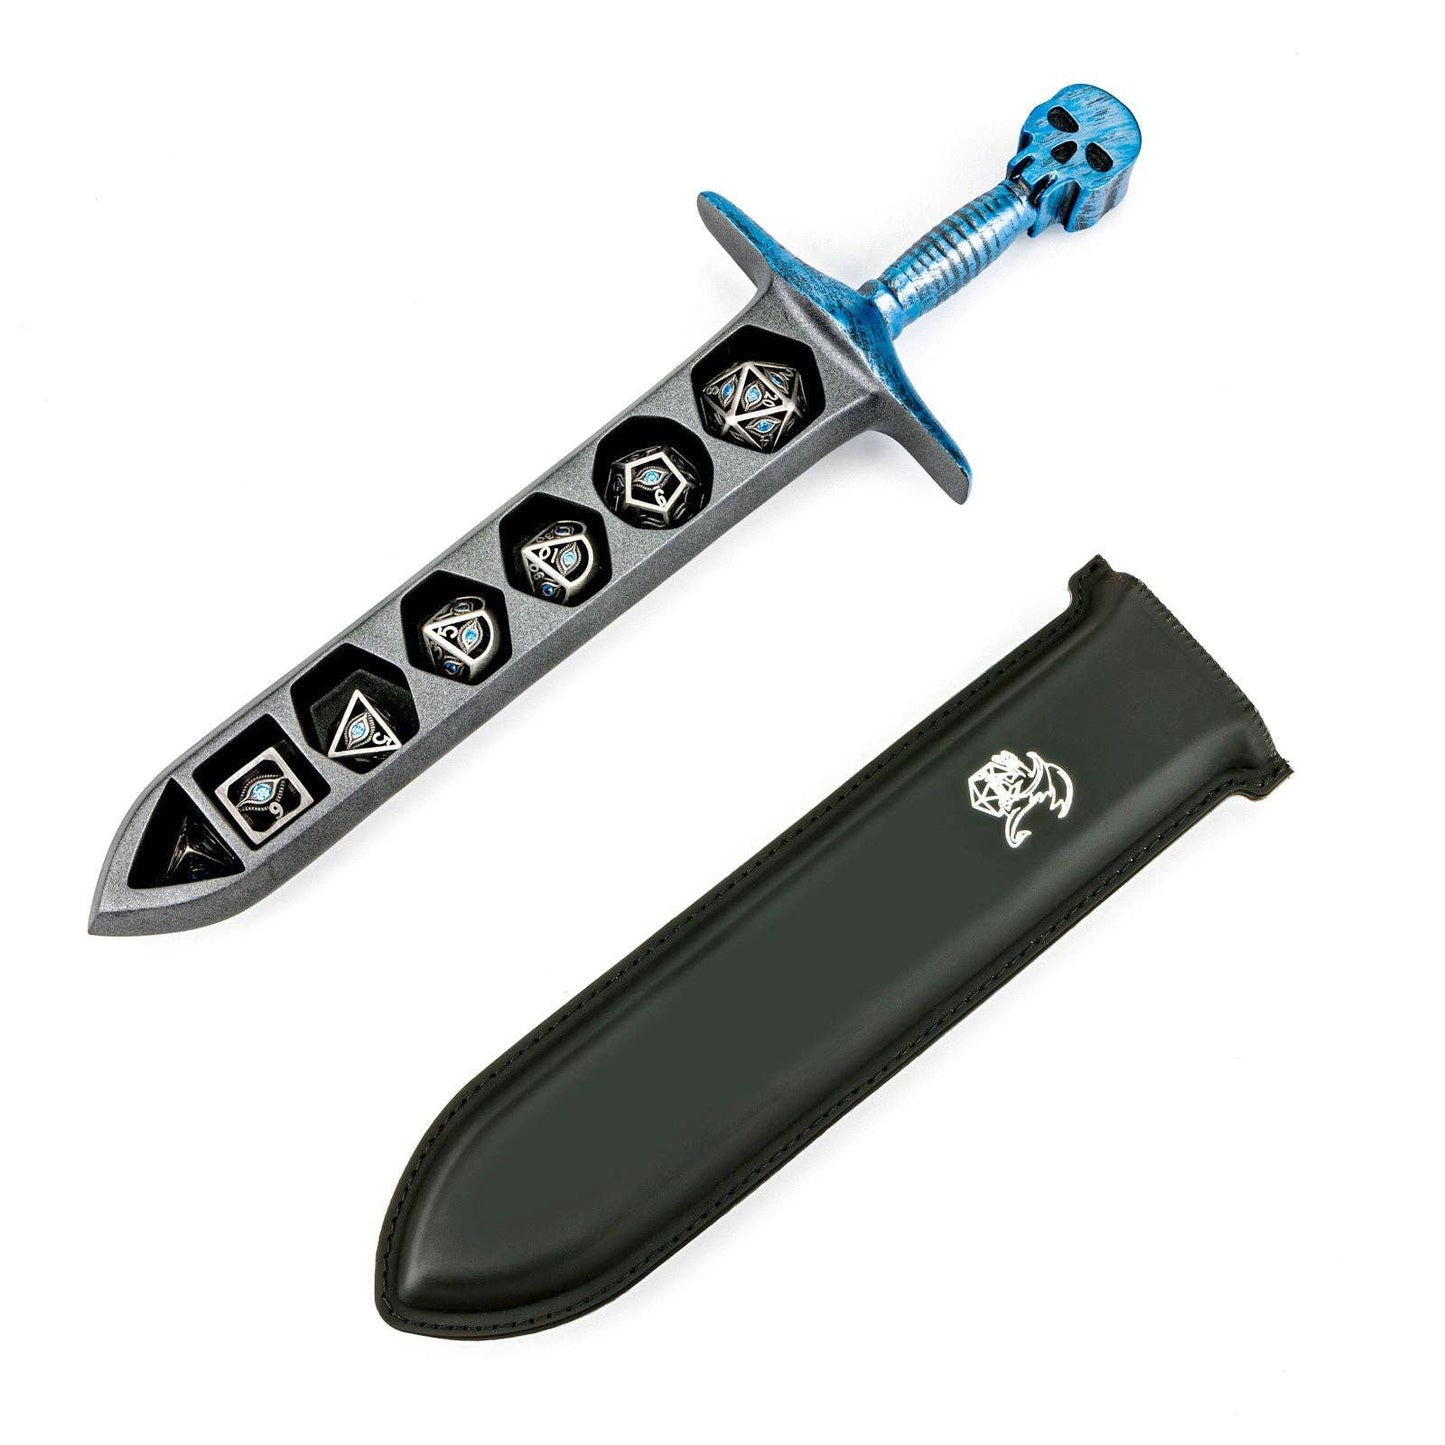 Hymgho Grim Dagger Dice Case with sheath cover - Blue